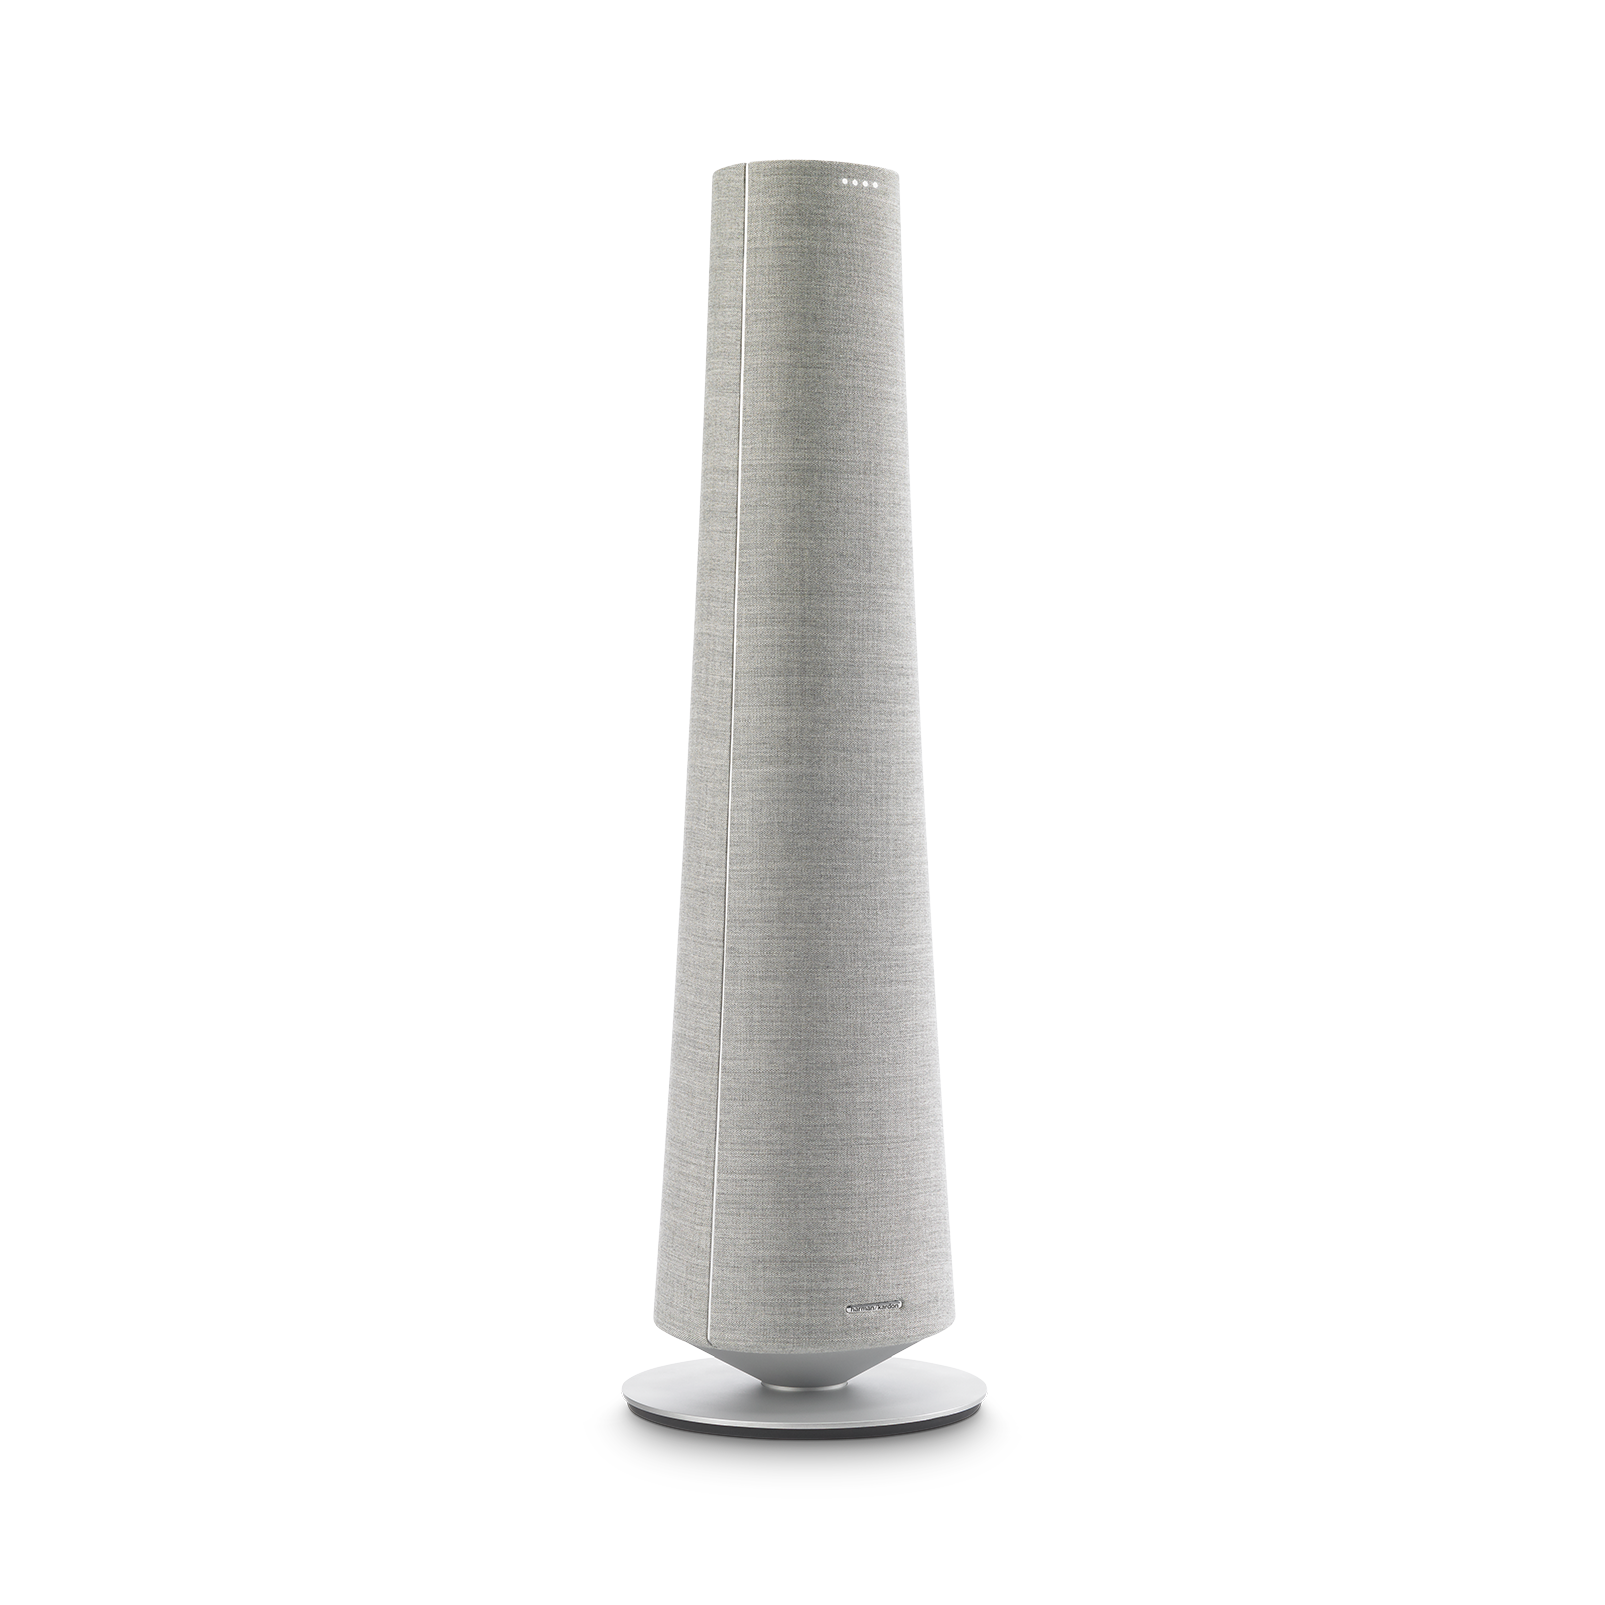 Harman Kardon Citation Tower - Grey - Smart Premium Floorstanding Speaker that delivers an impactful performance - Detailshot 2